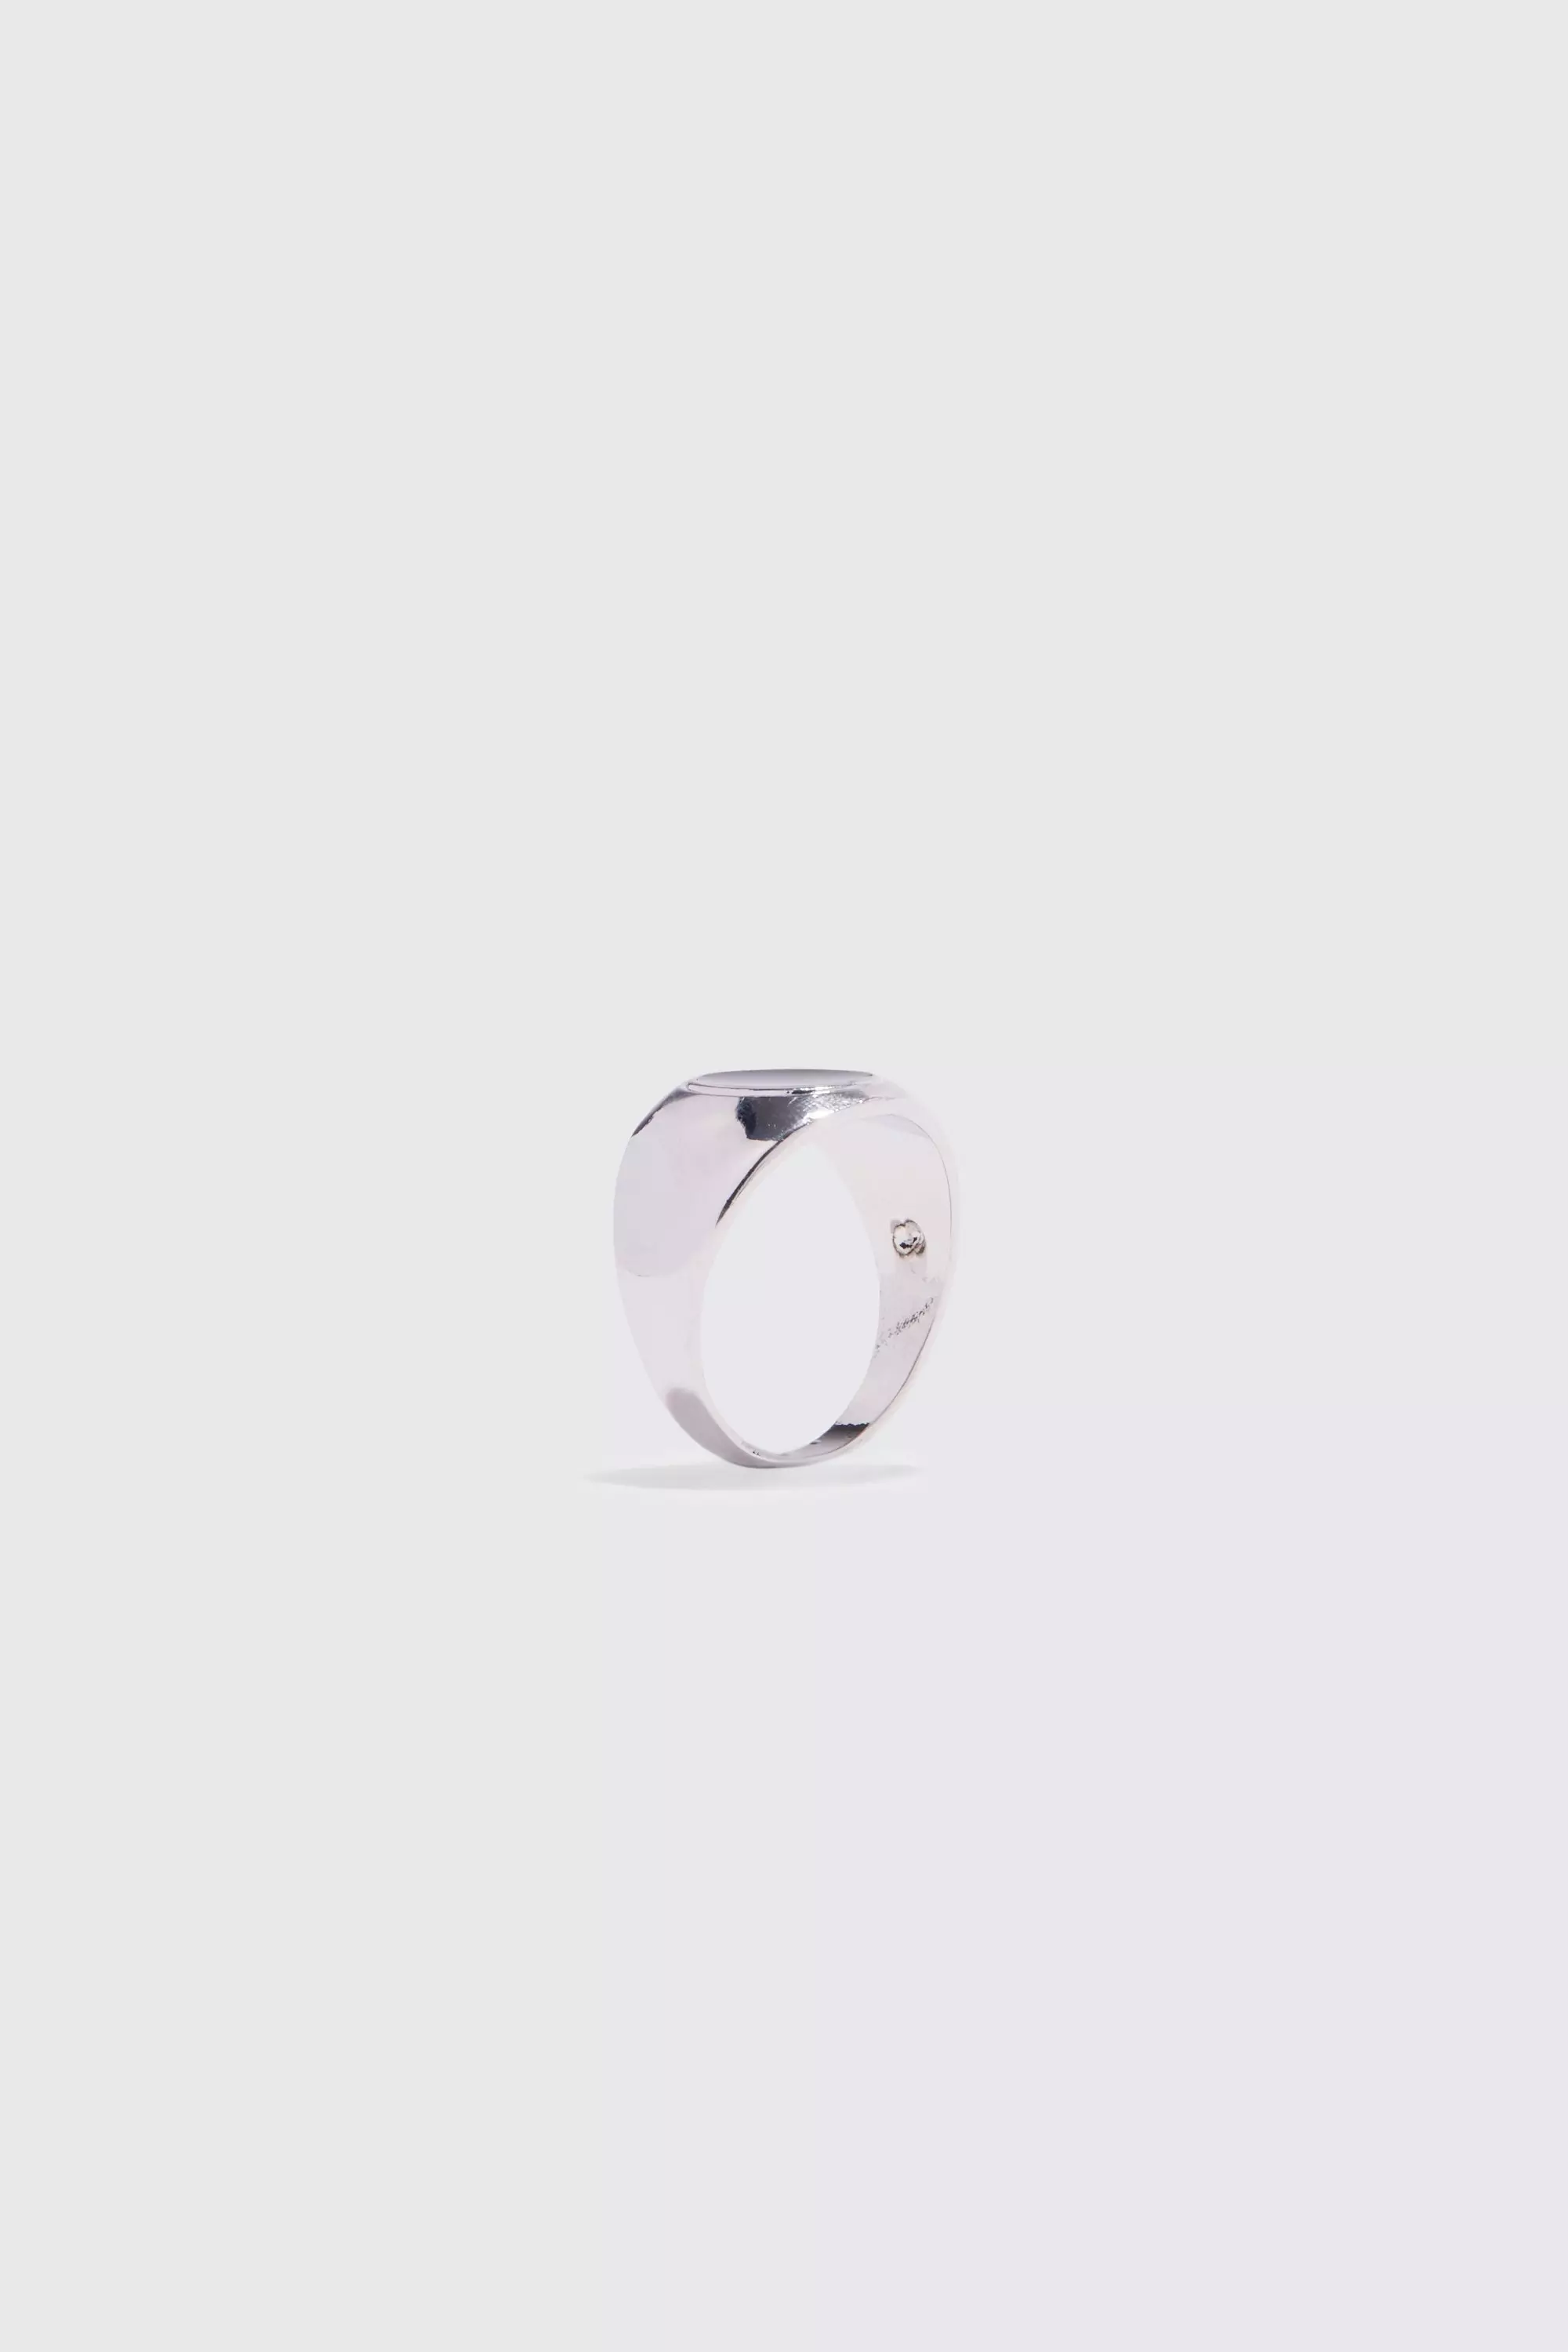 Black Onyx Style Signet Ring